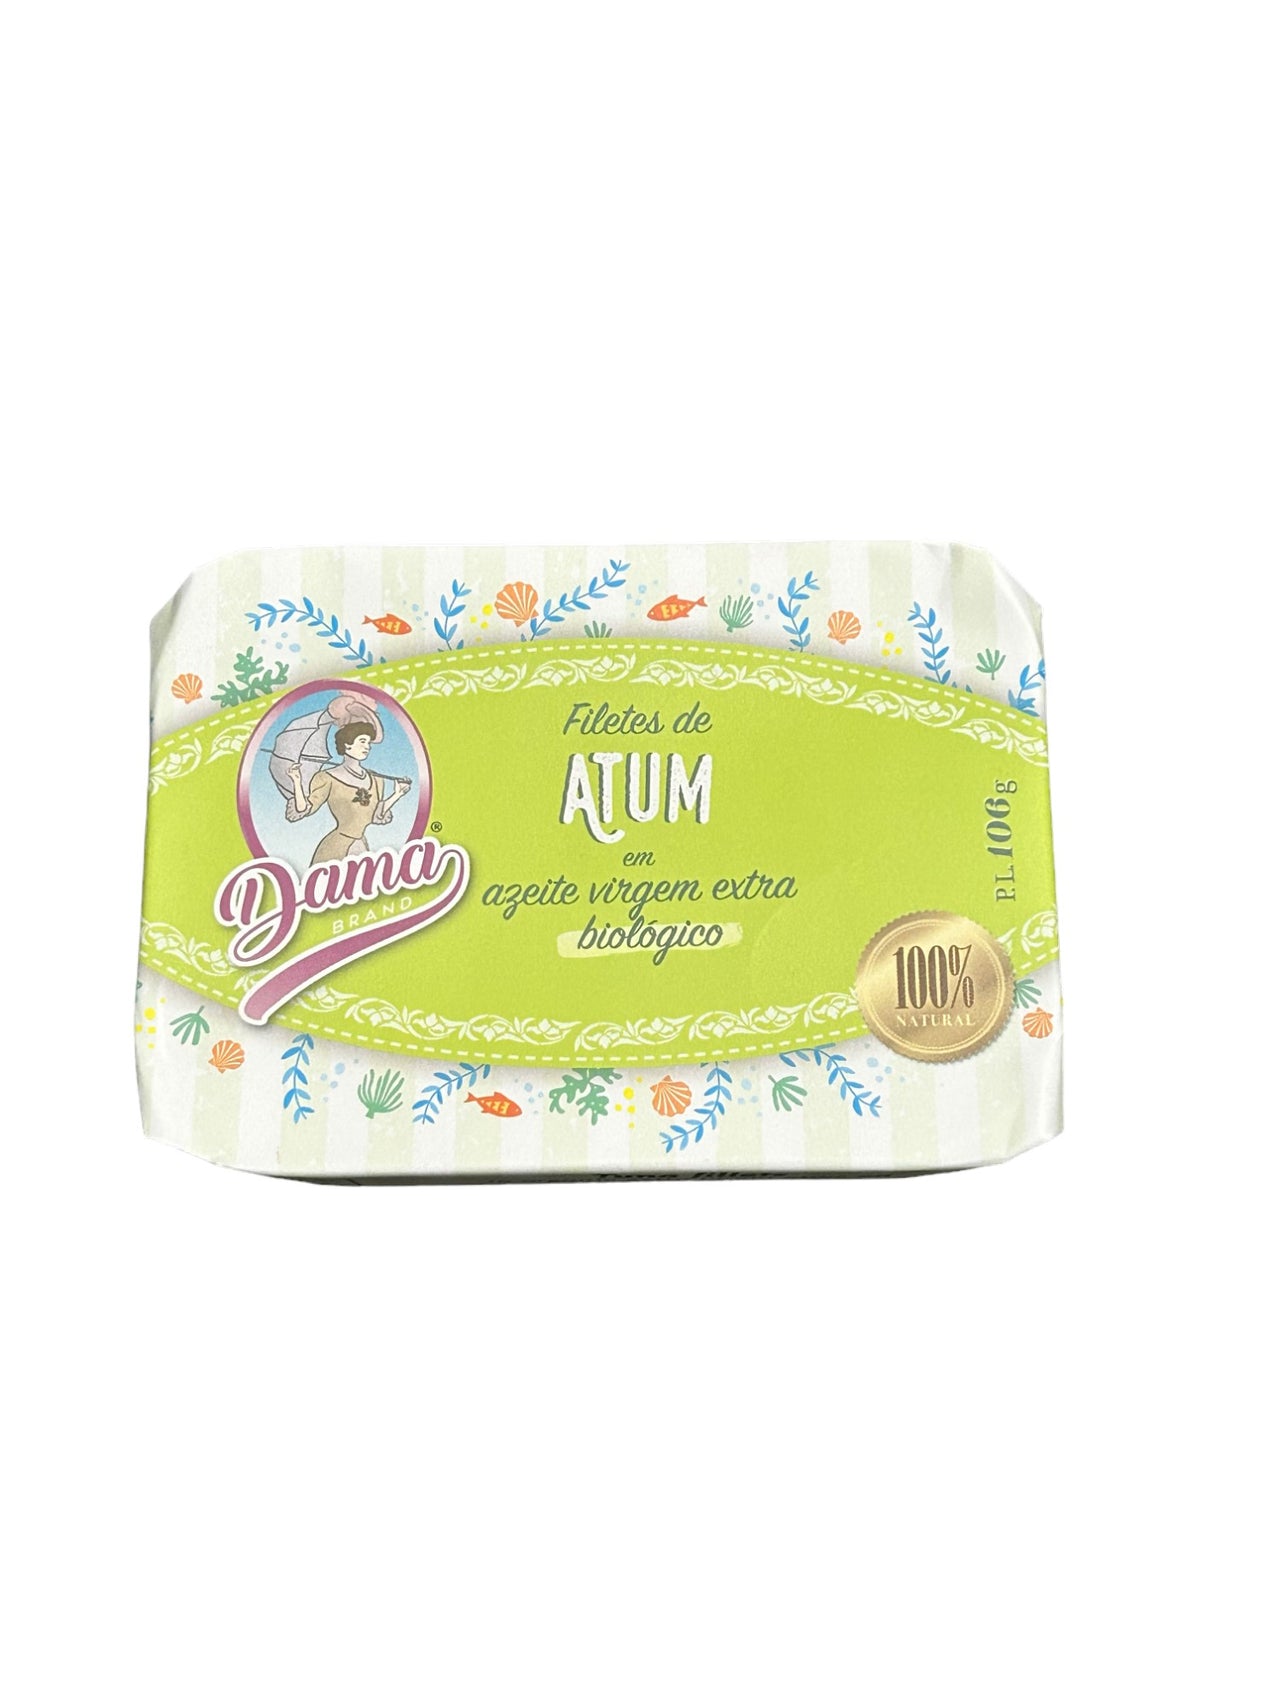 Dama Brand Tuna Fillets in Organic Extra Virgin Olive Oil - 3 Pack